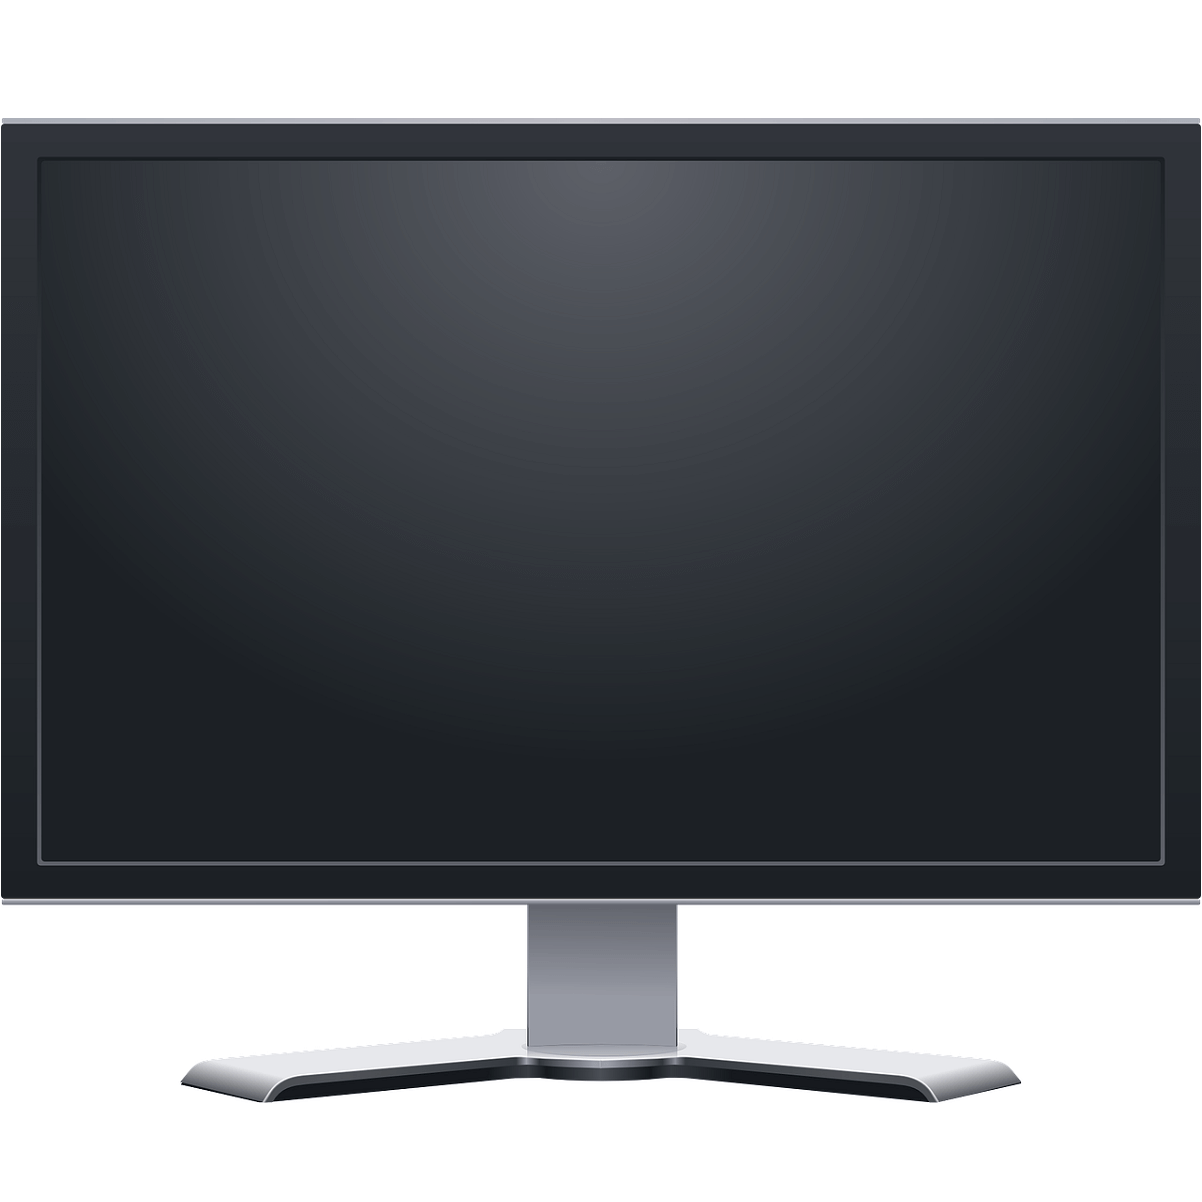 computer black screen with cursor